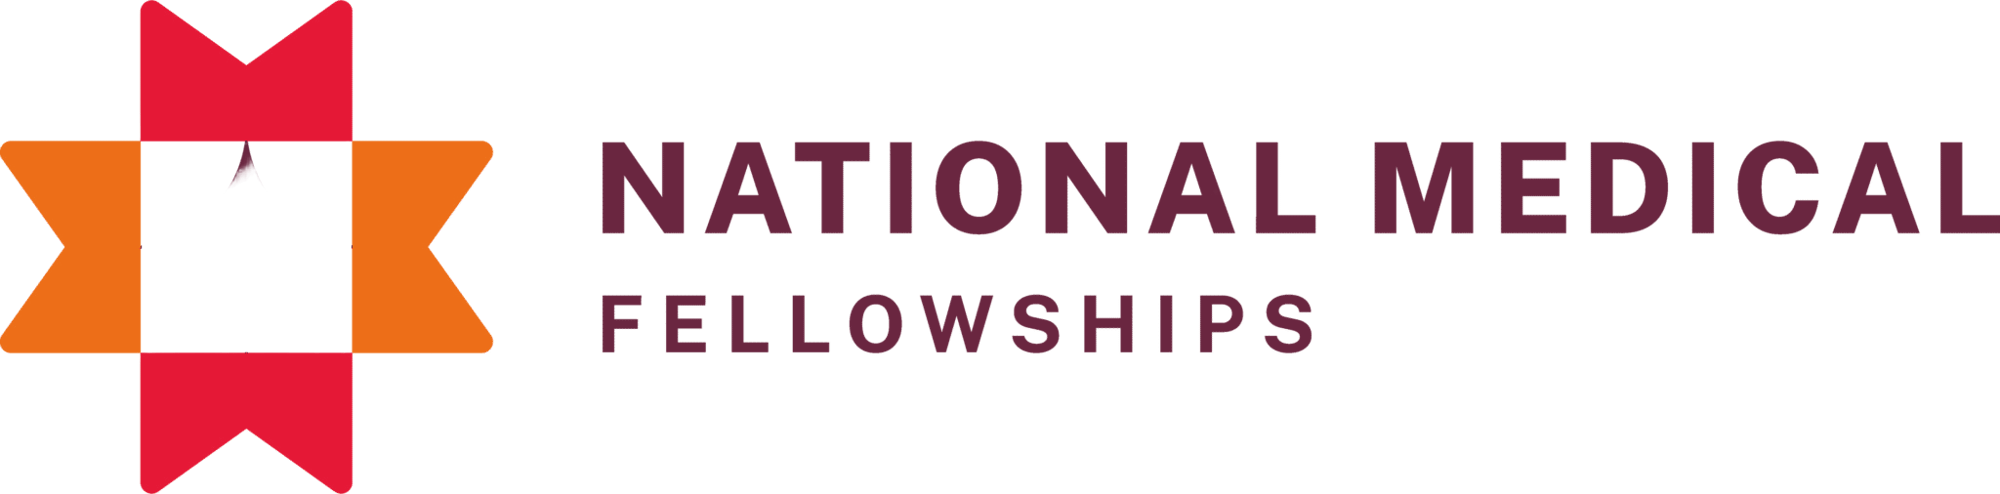 national-medical-fellowships-nmf-logo-horizontal-full-color-rgb-3840px-w-72ppi